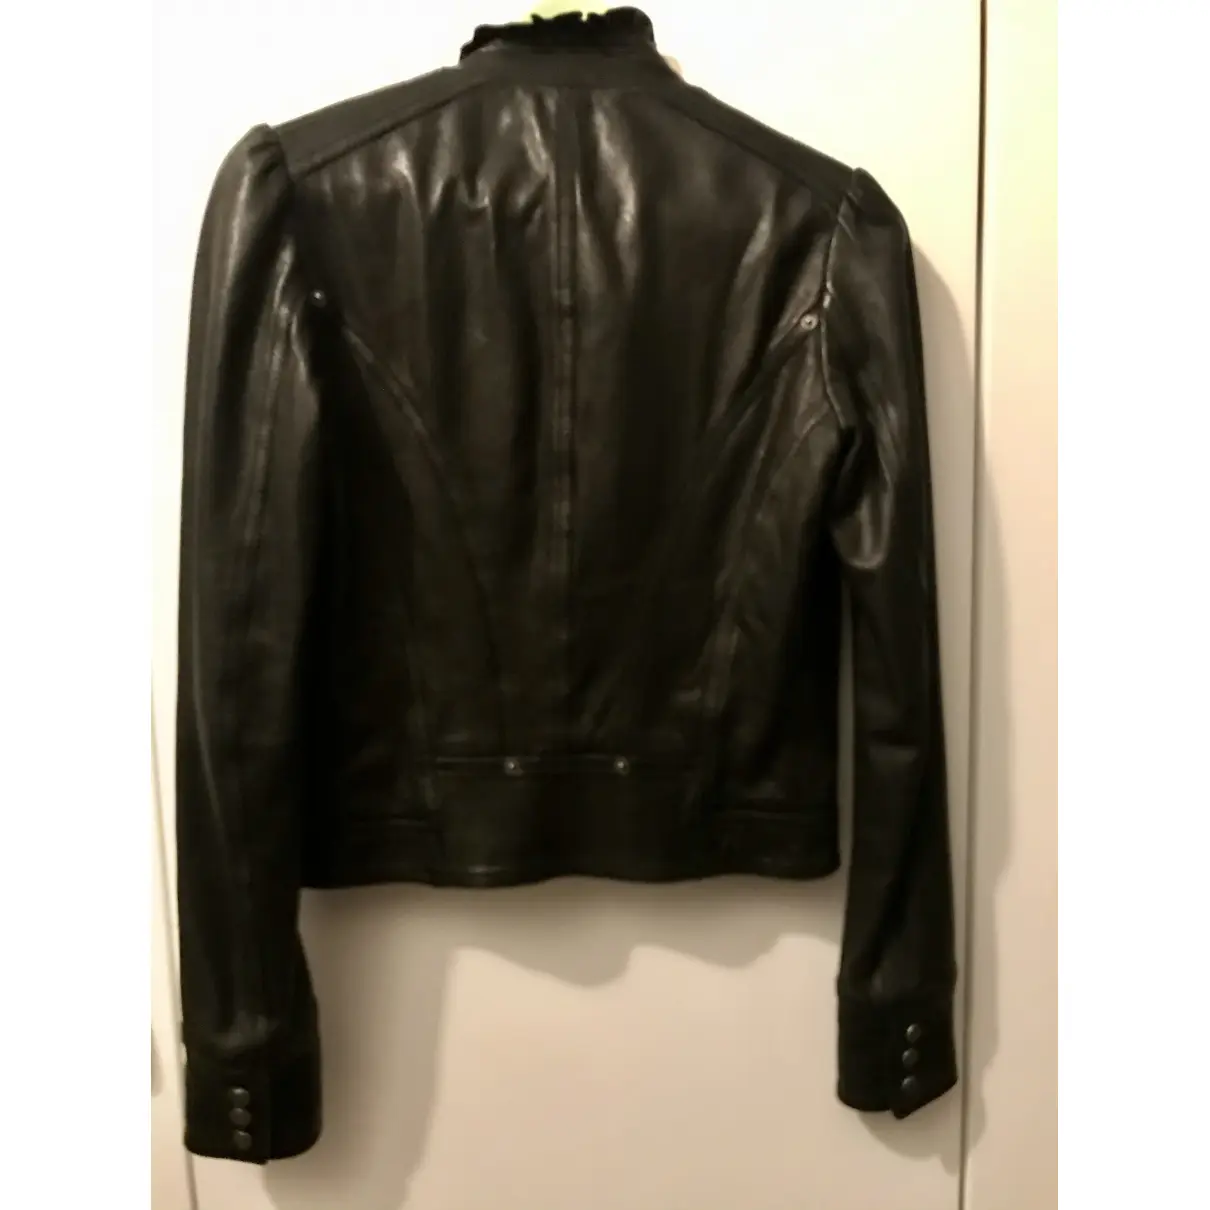 Buy John Galliano Leather short vest online